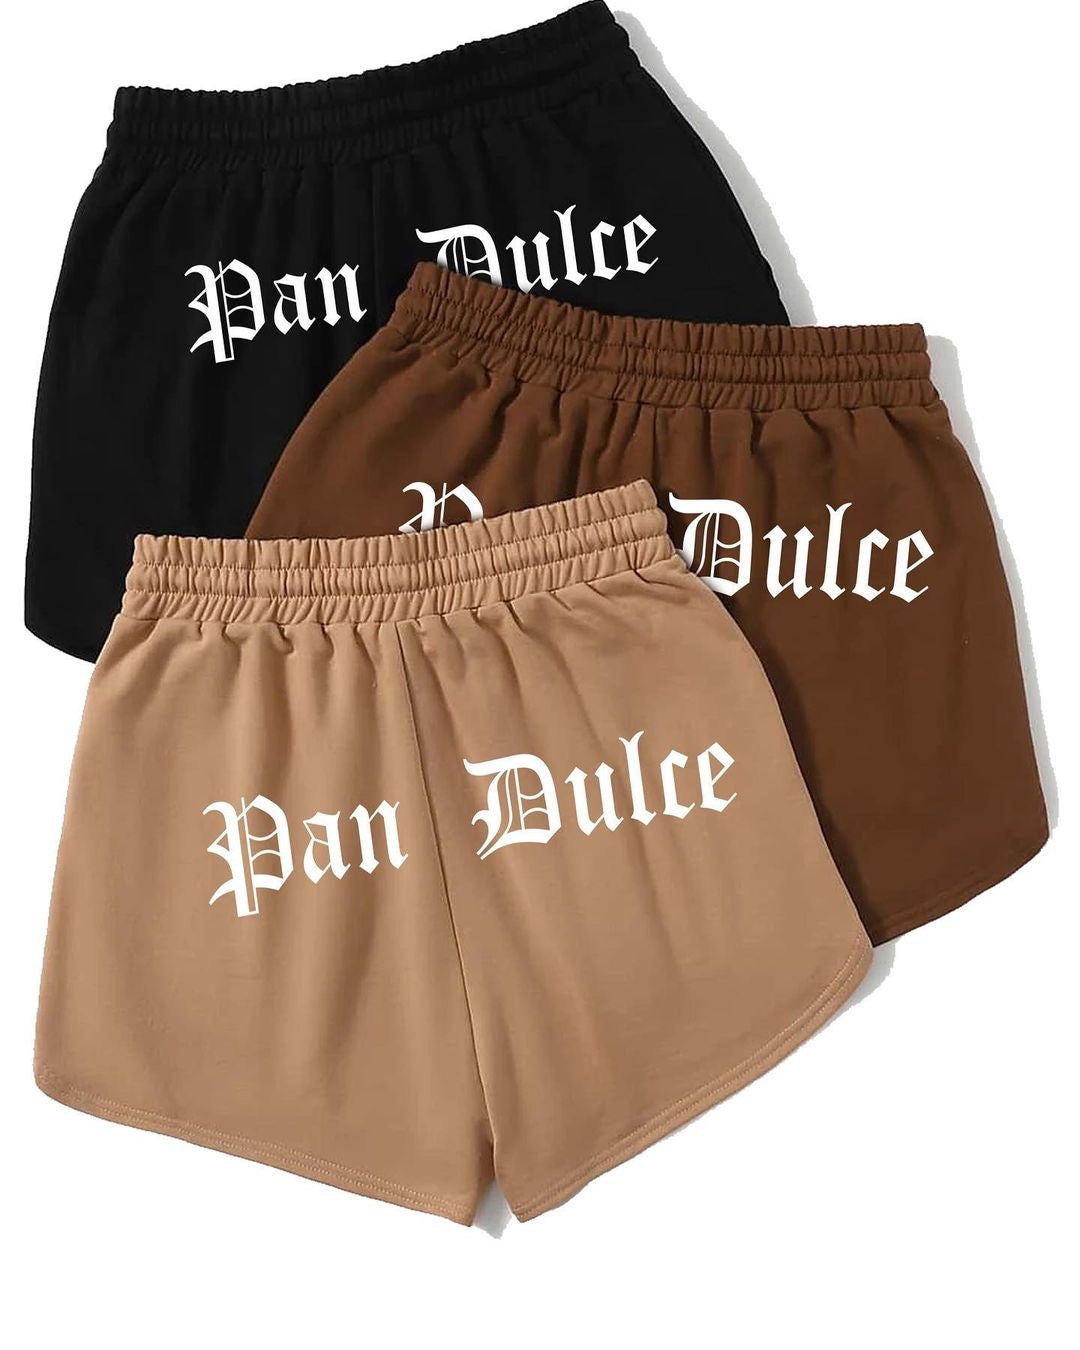 Pan Dulce shorts